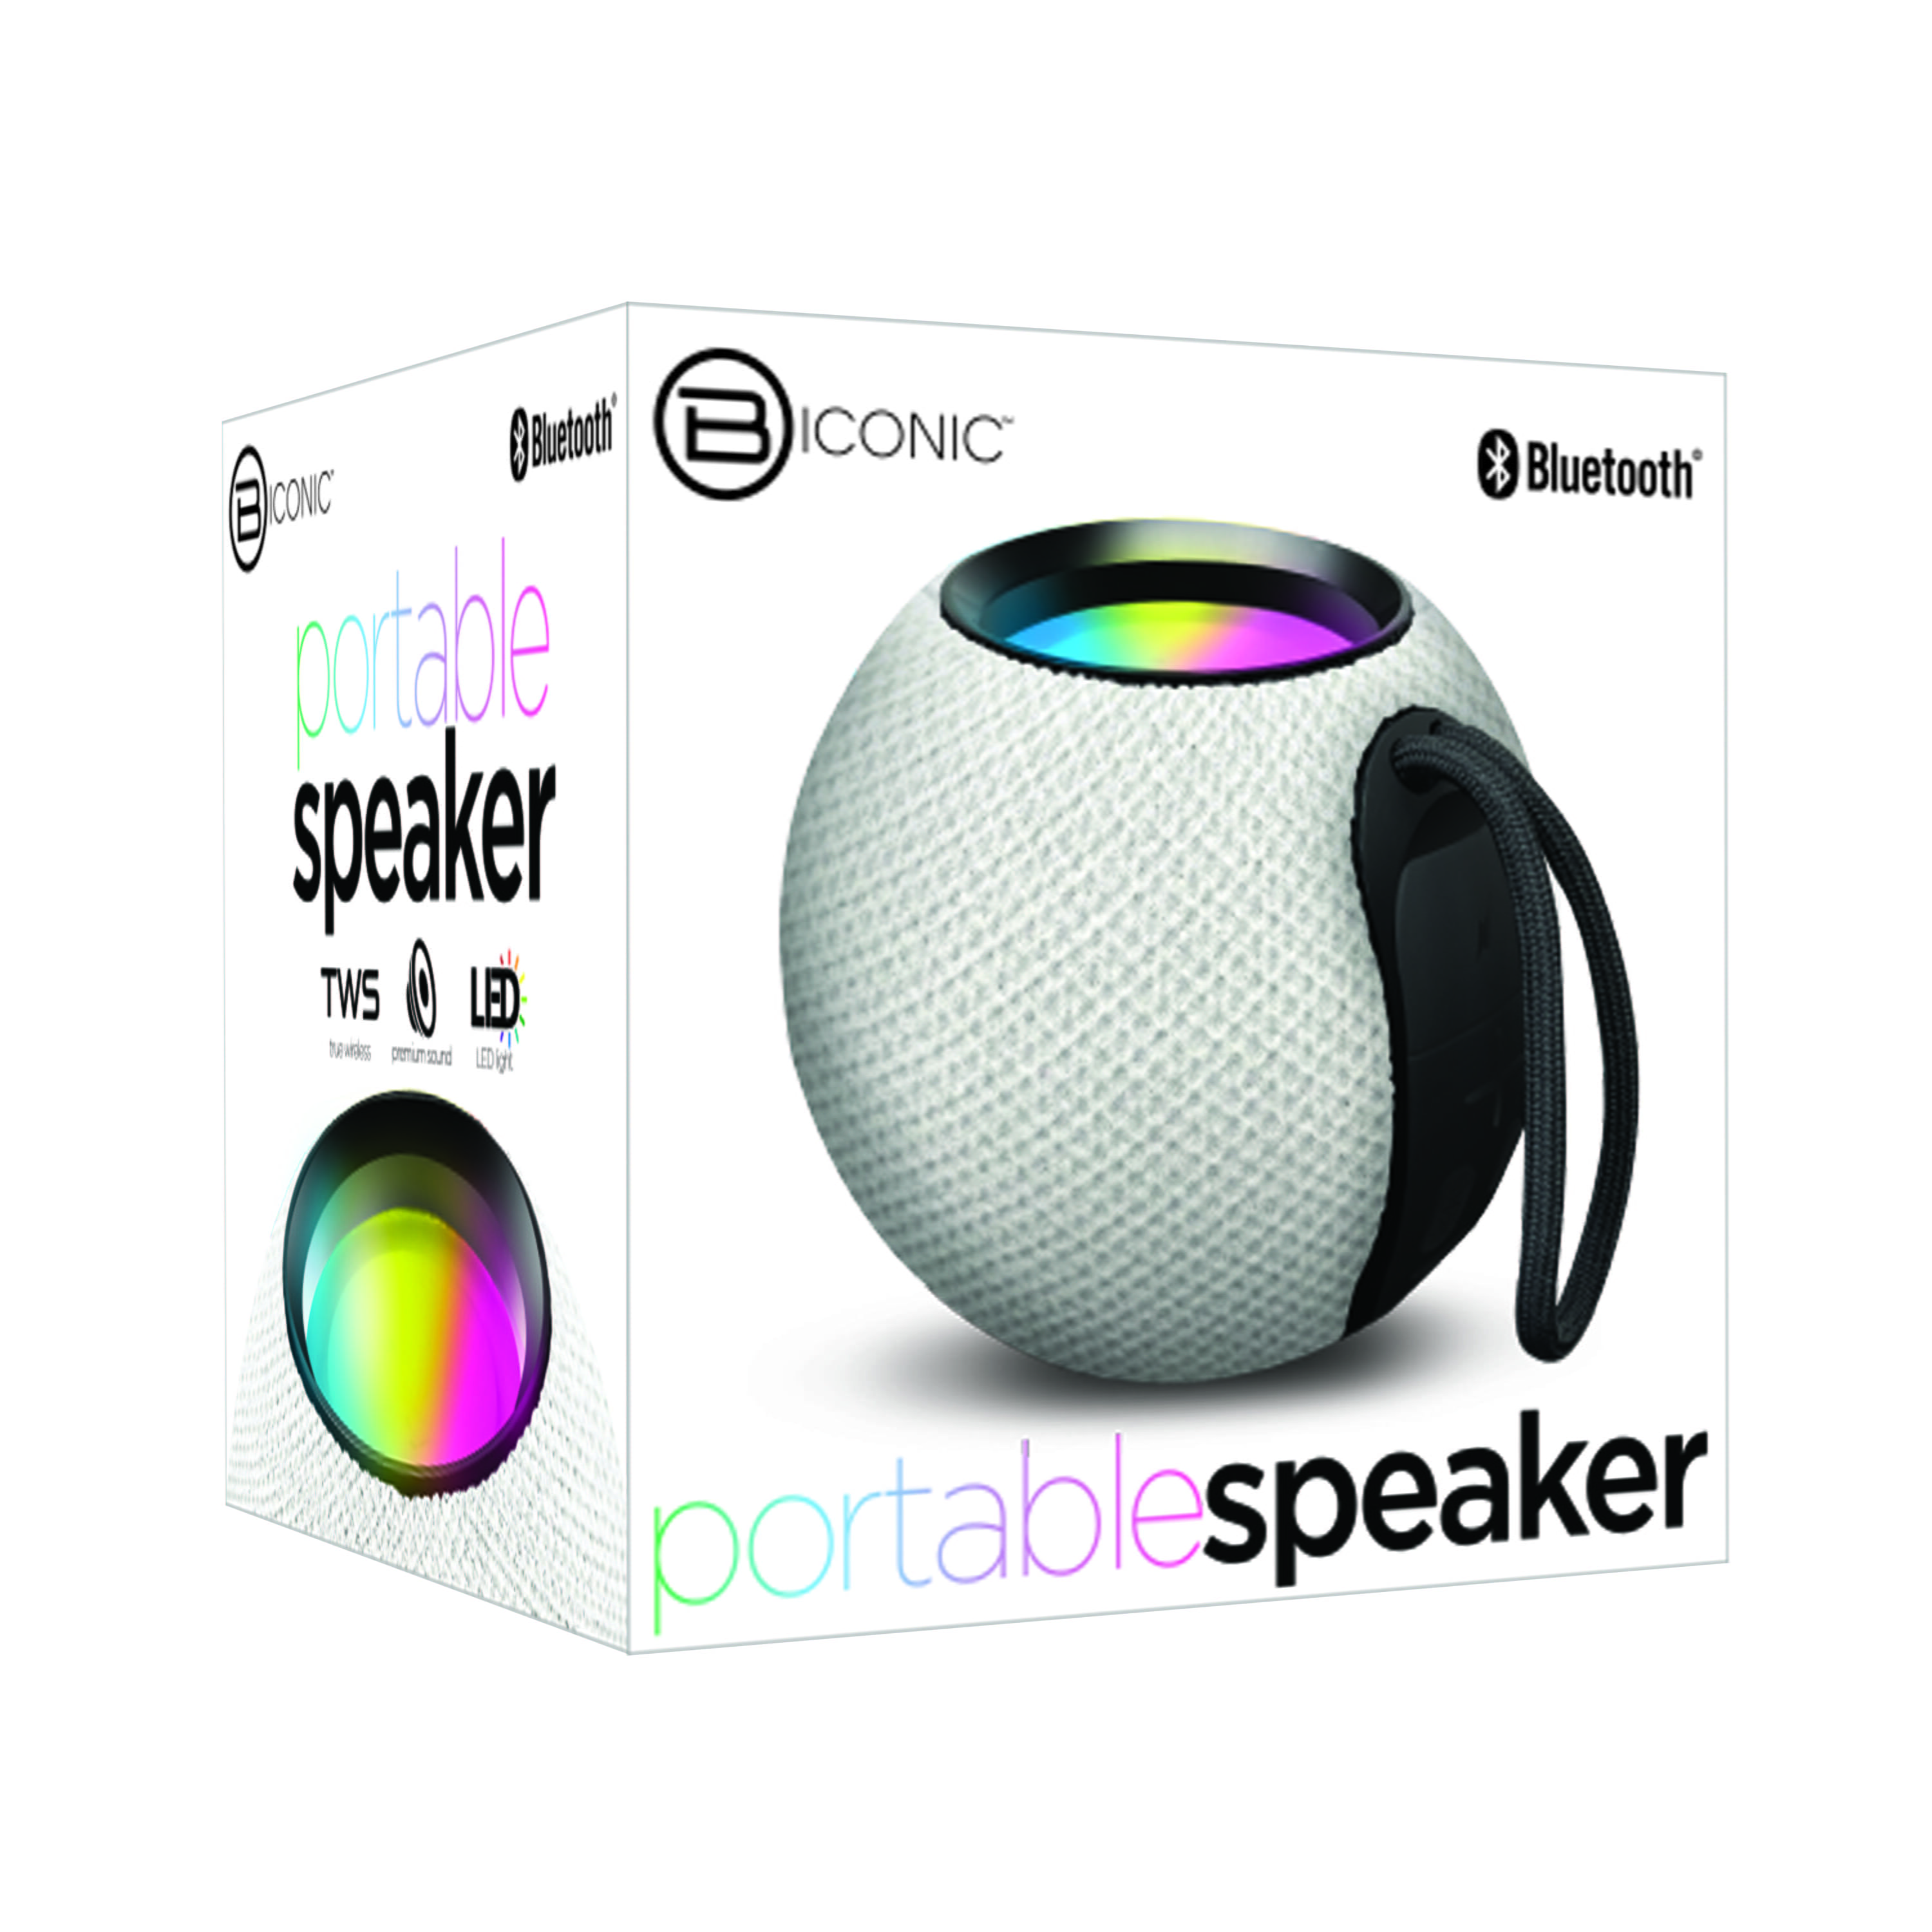 Bluetooth fabric speaker, Round speaker, Biconic fabric speaker, Portable fabric speaker